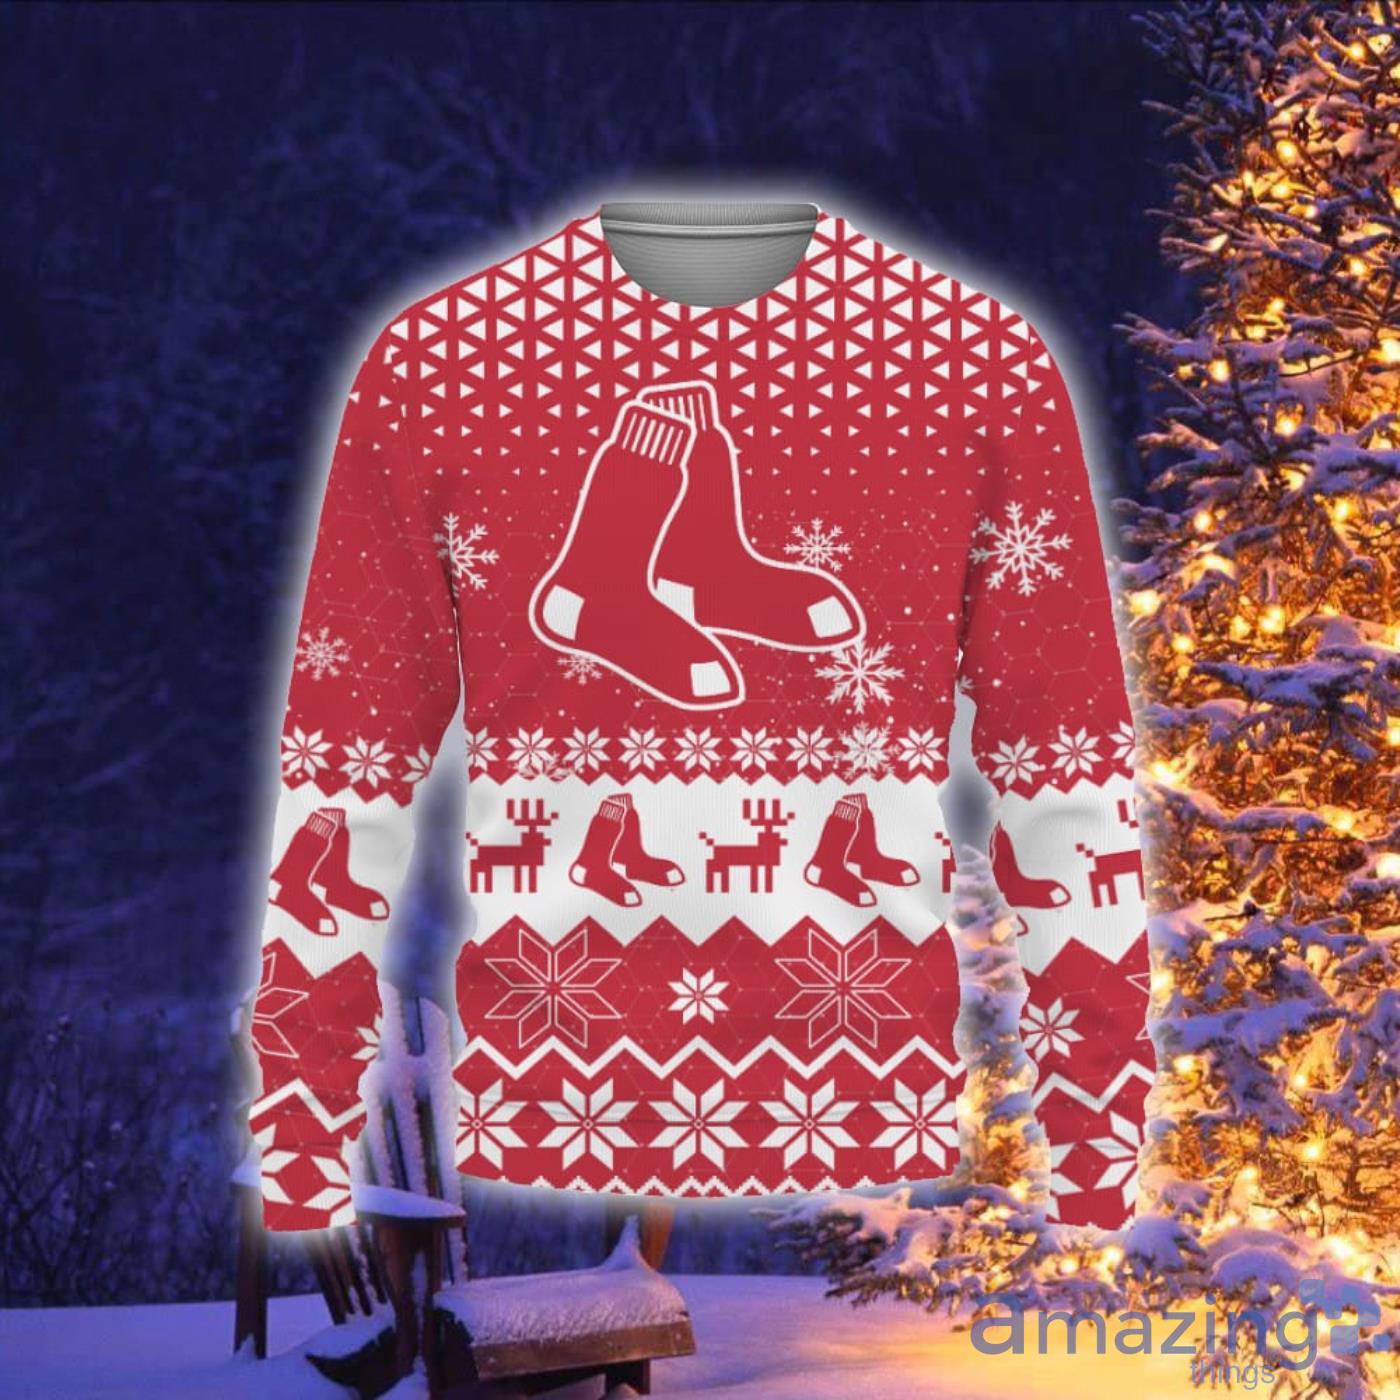 Boston Red Sox Christmas Pattern Ugly Christmas Sweater Christmas